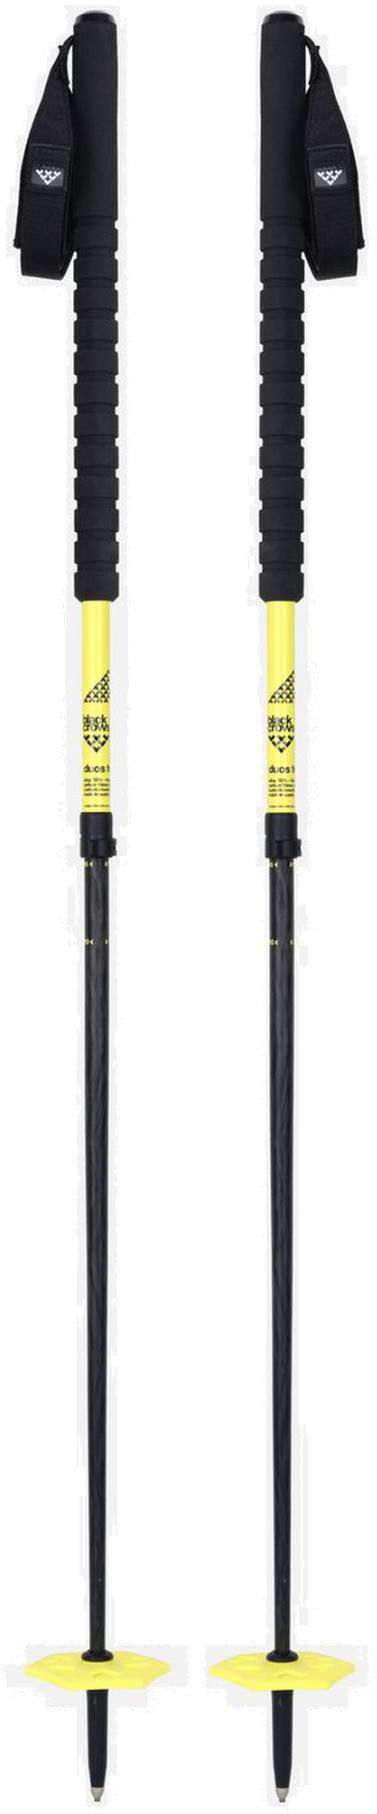 Duos Freebird 22/23 Poles Black / Yellow